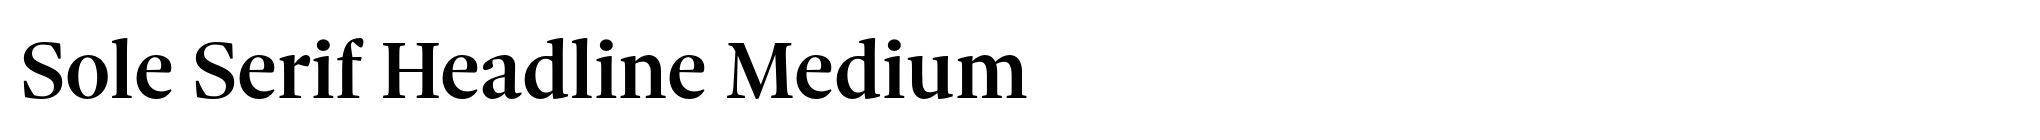 Sole Serif Headline Medium image